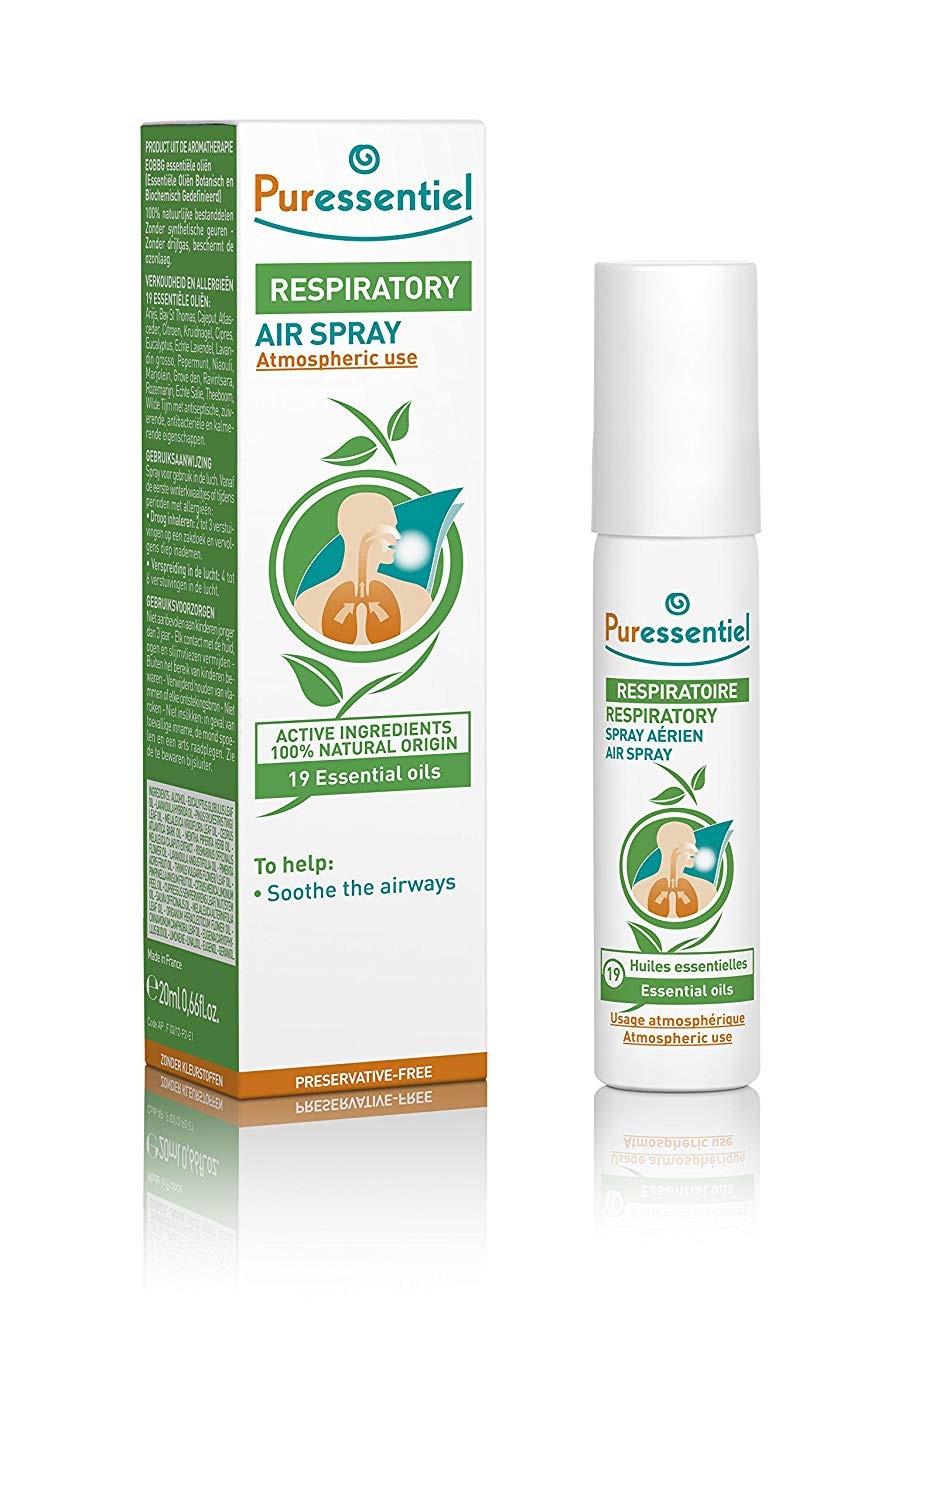 Puressentiel respiratory air spray